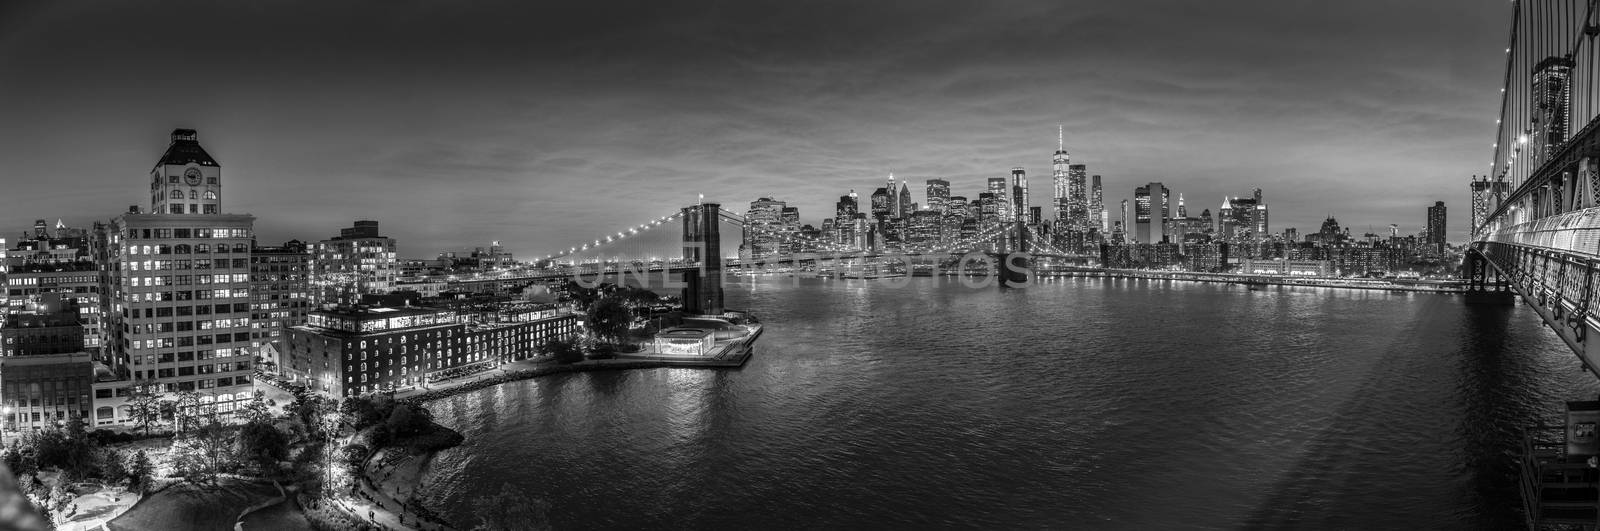 Brooklyn, Brooklyn park, Brooklyn Bridge, Janes Carousel and Lower Manhattan skyline at night seen from Manhattan bridge, New York city, USA. Black and white wide angle panoramic image.